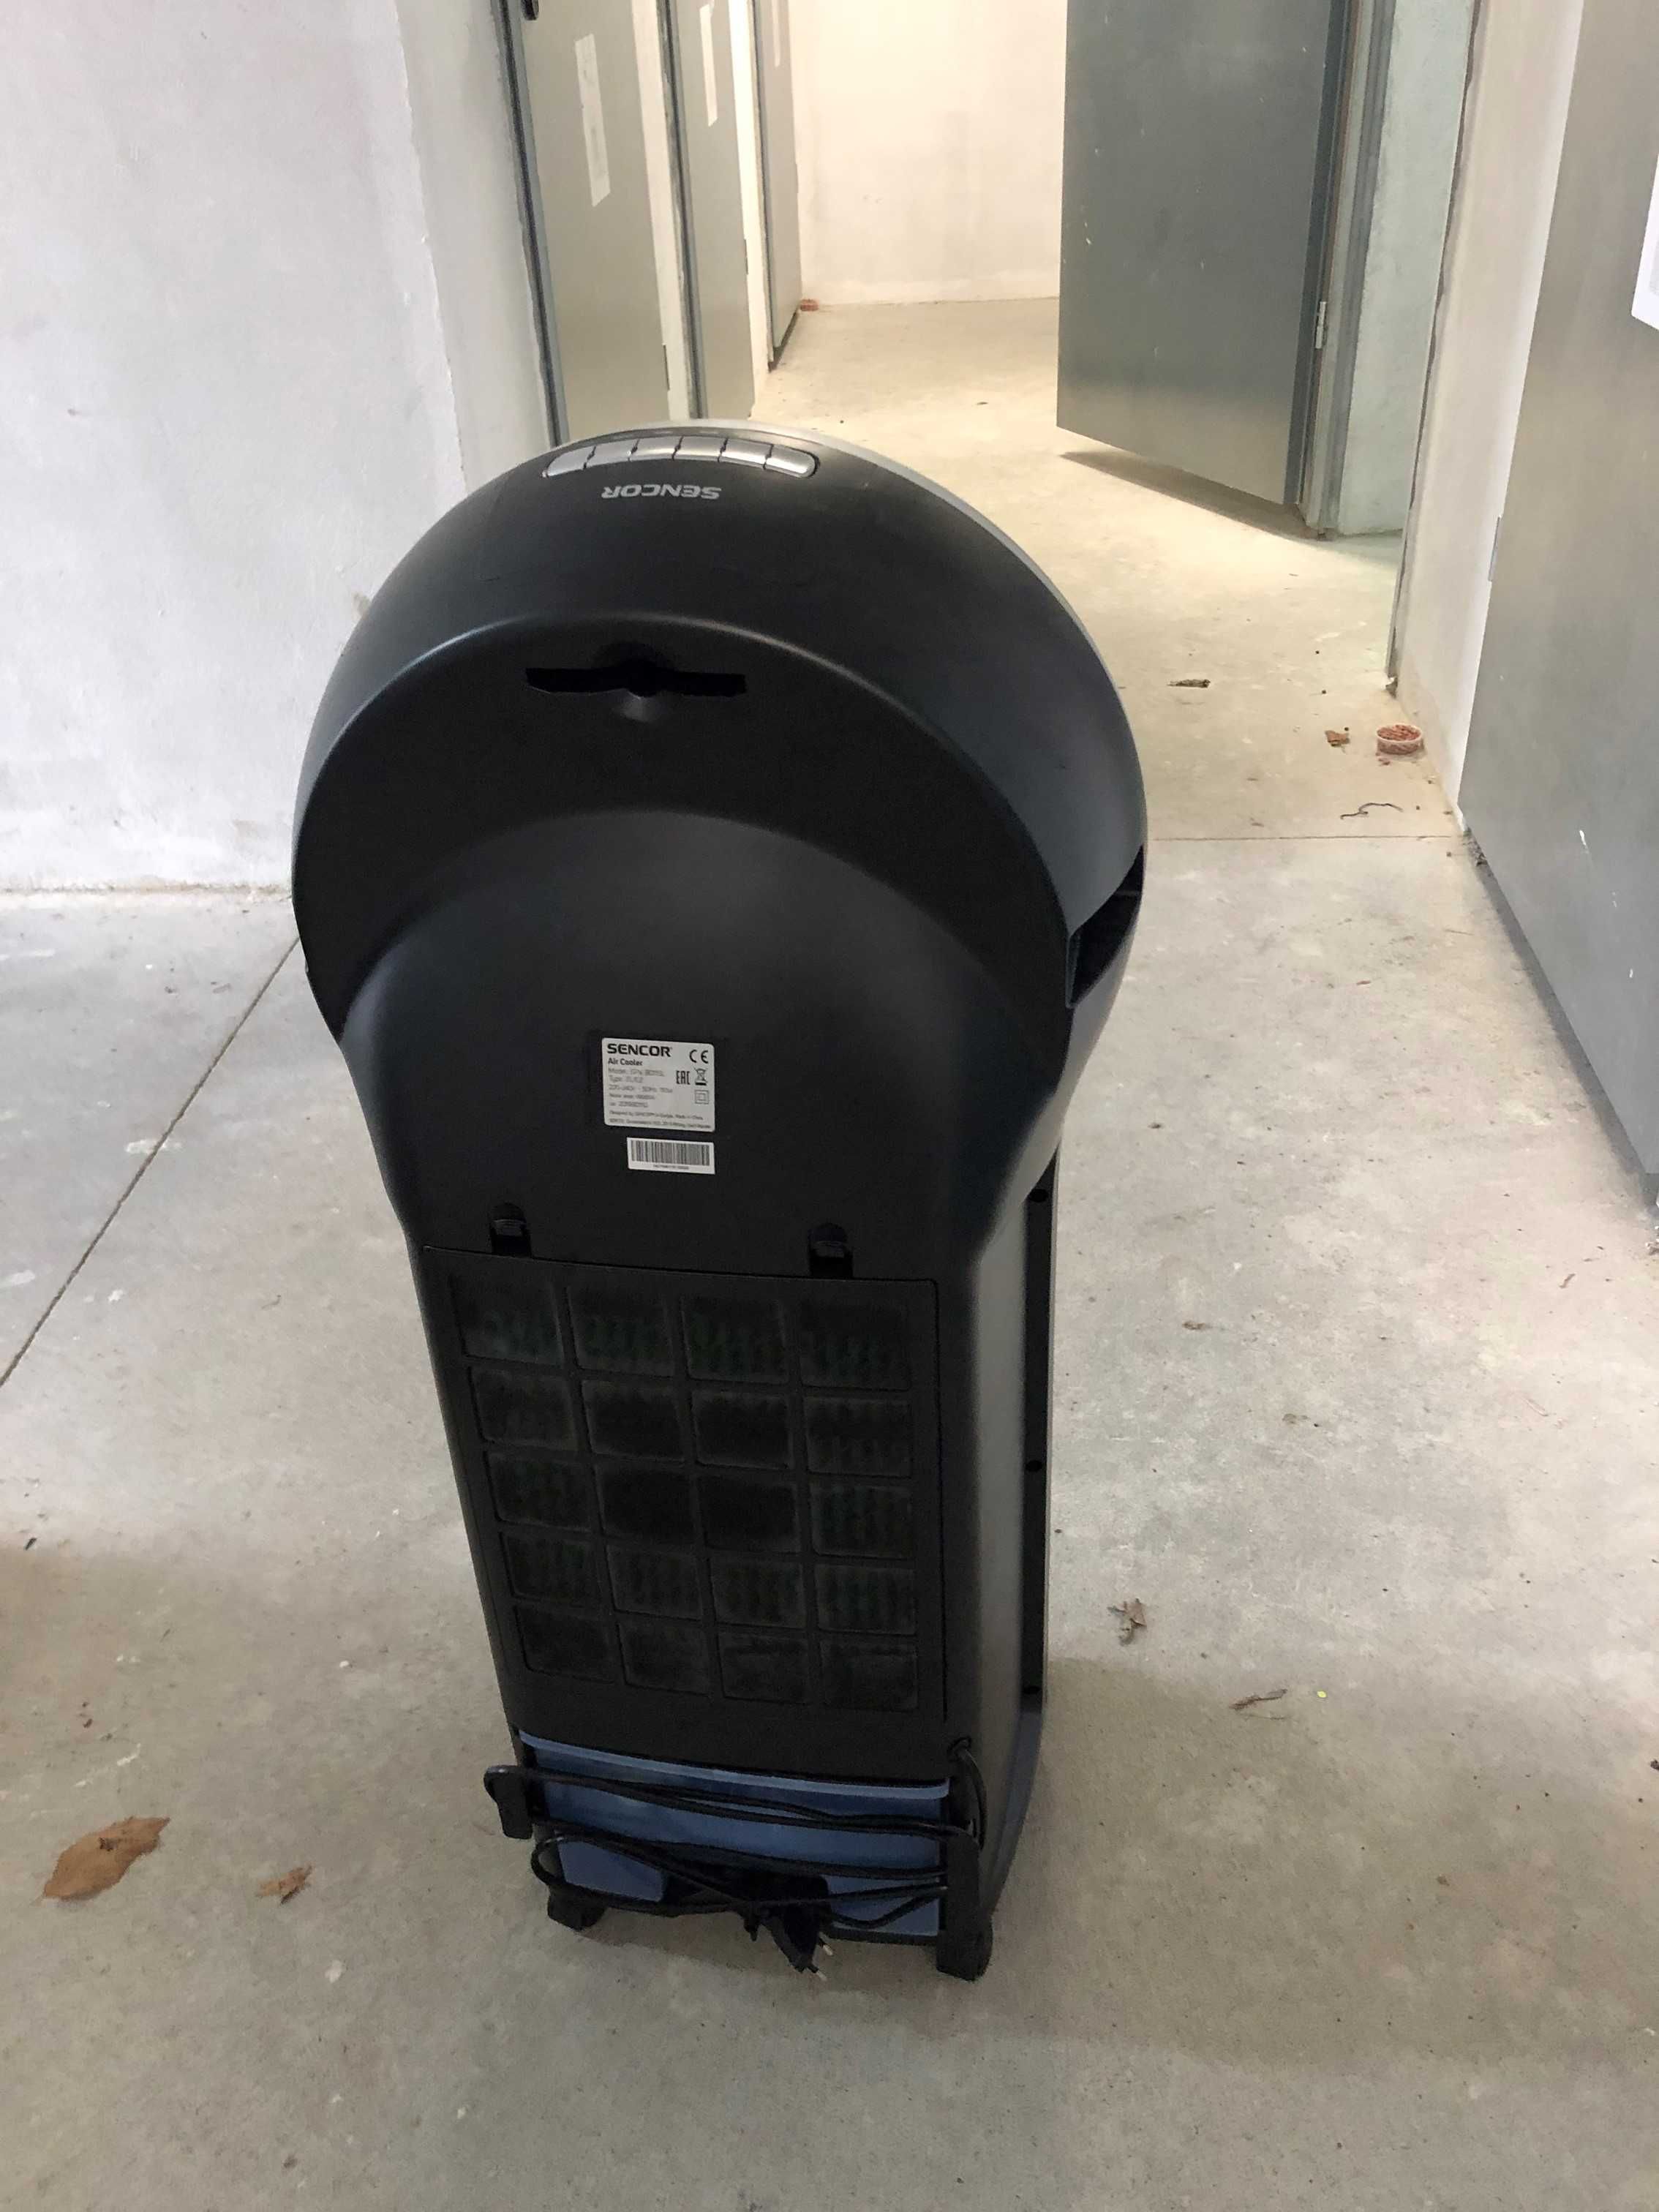 Klimator Sencor Air Cooler